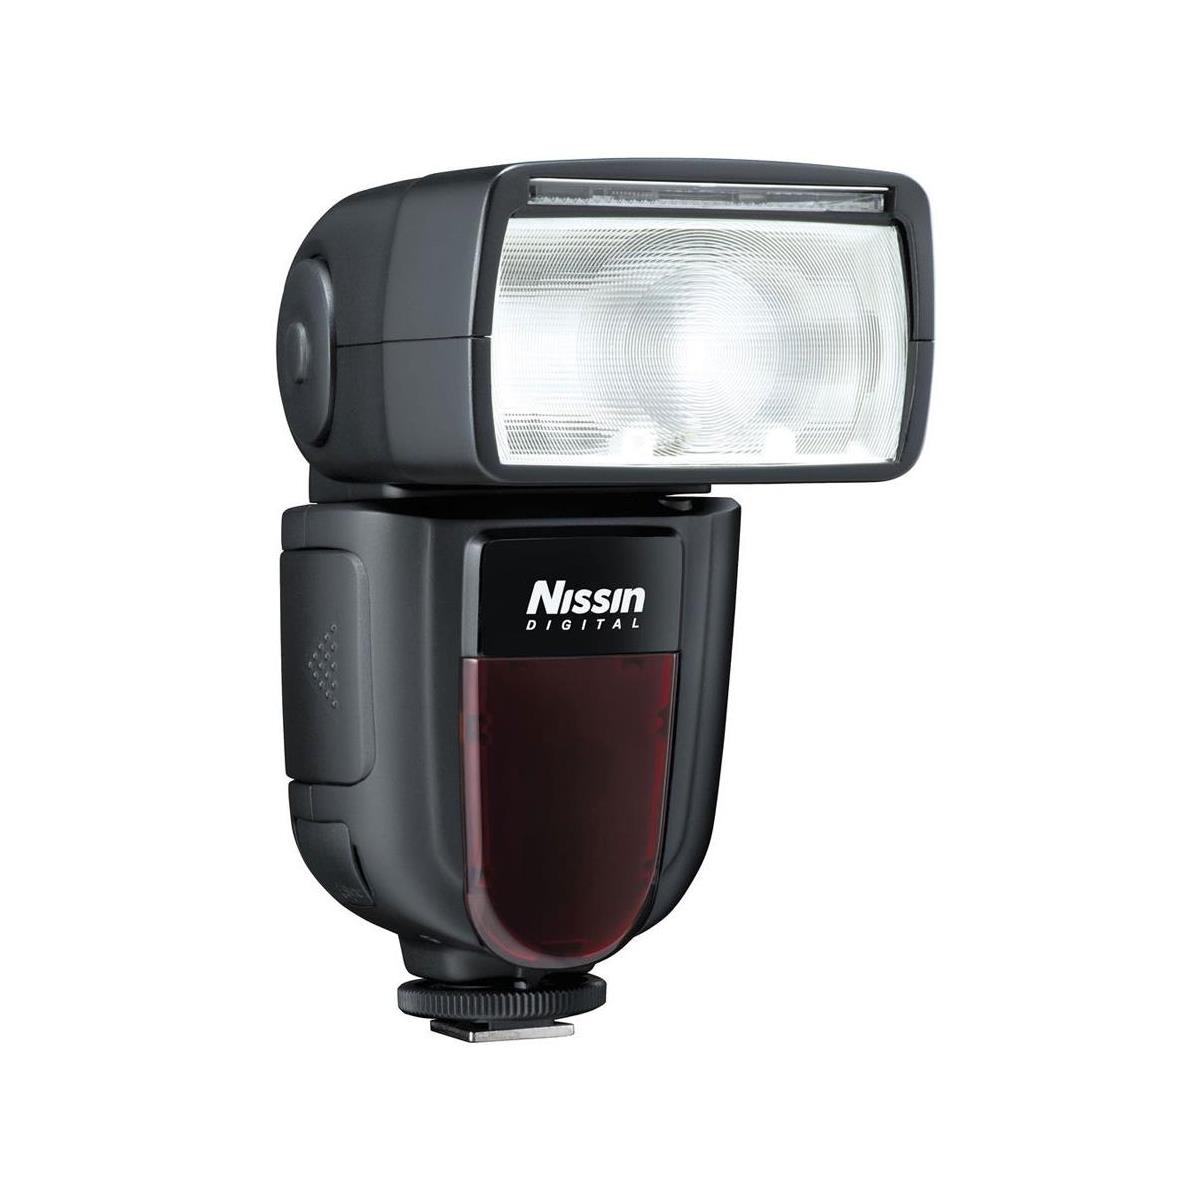 Image of Nissin Di700A Flash for Nikon DSLR Cameras